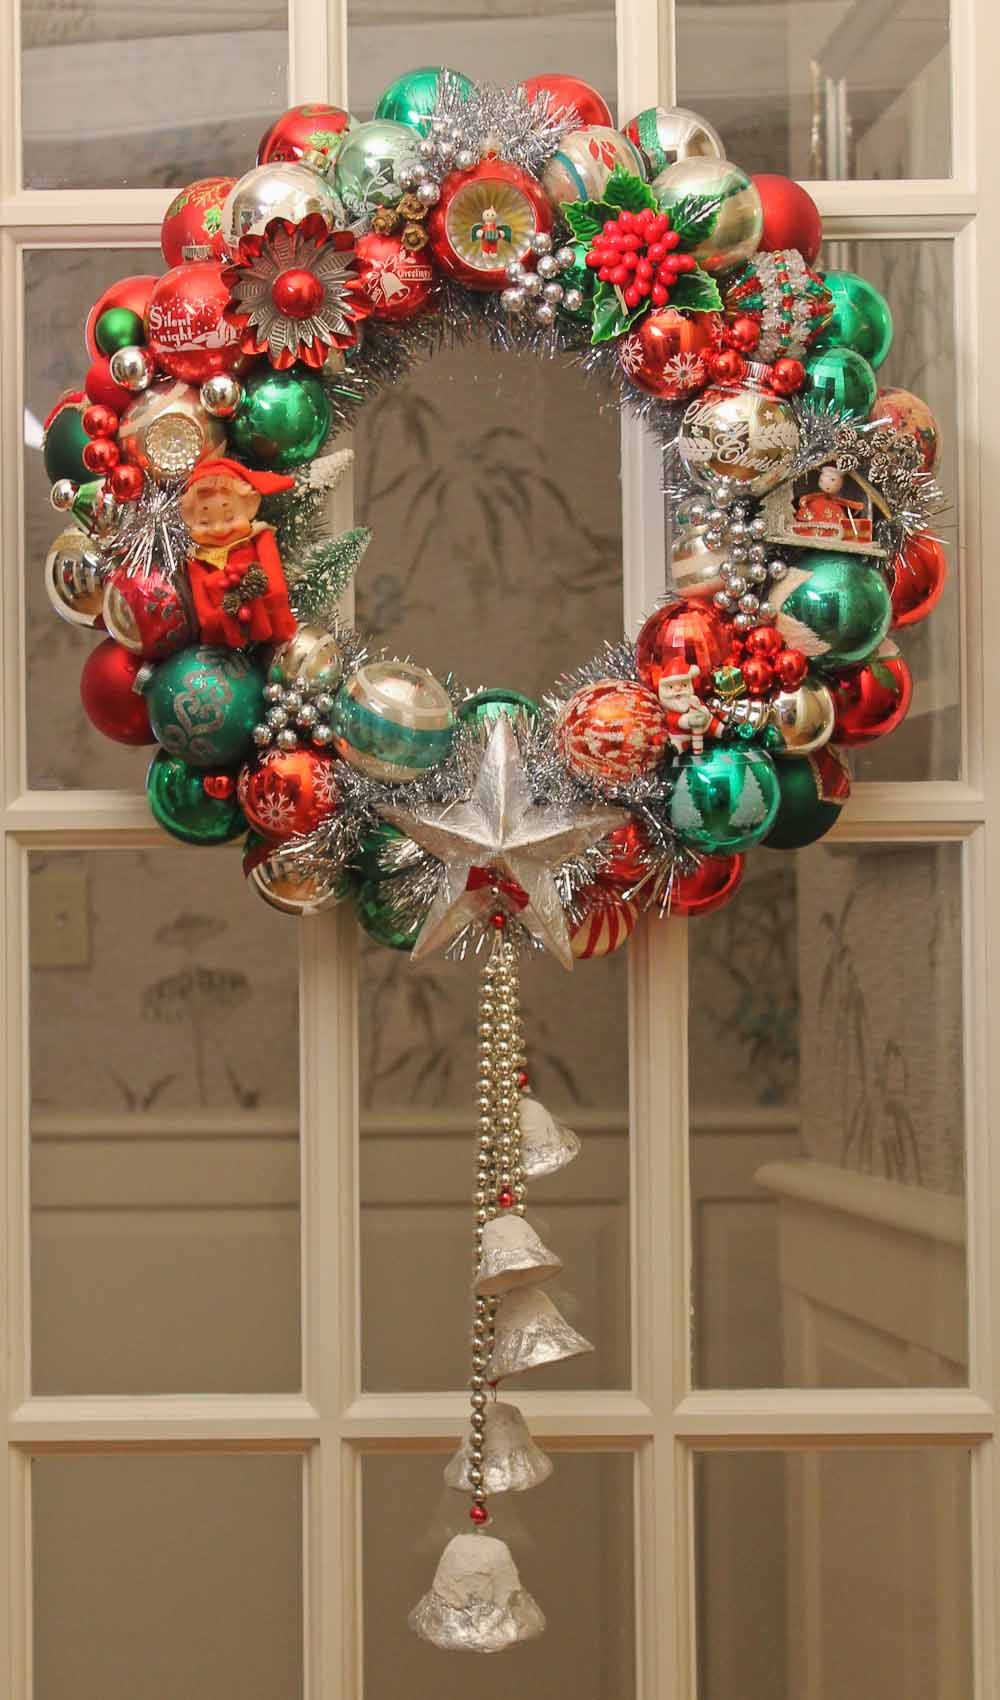 DIY Christmas Reef
 100 photos of DIY Christmas ornament wreaths Upload